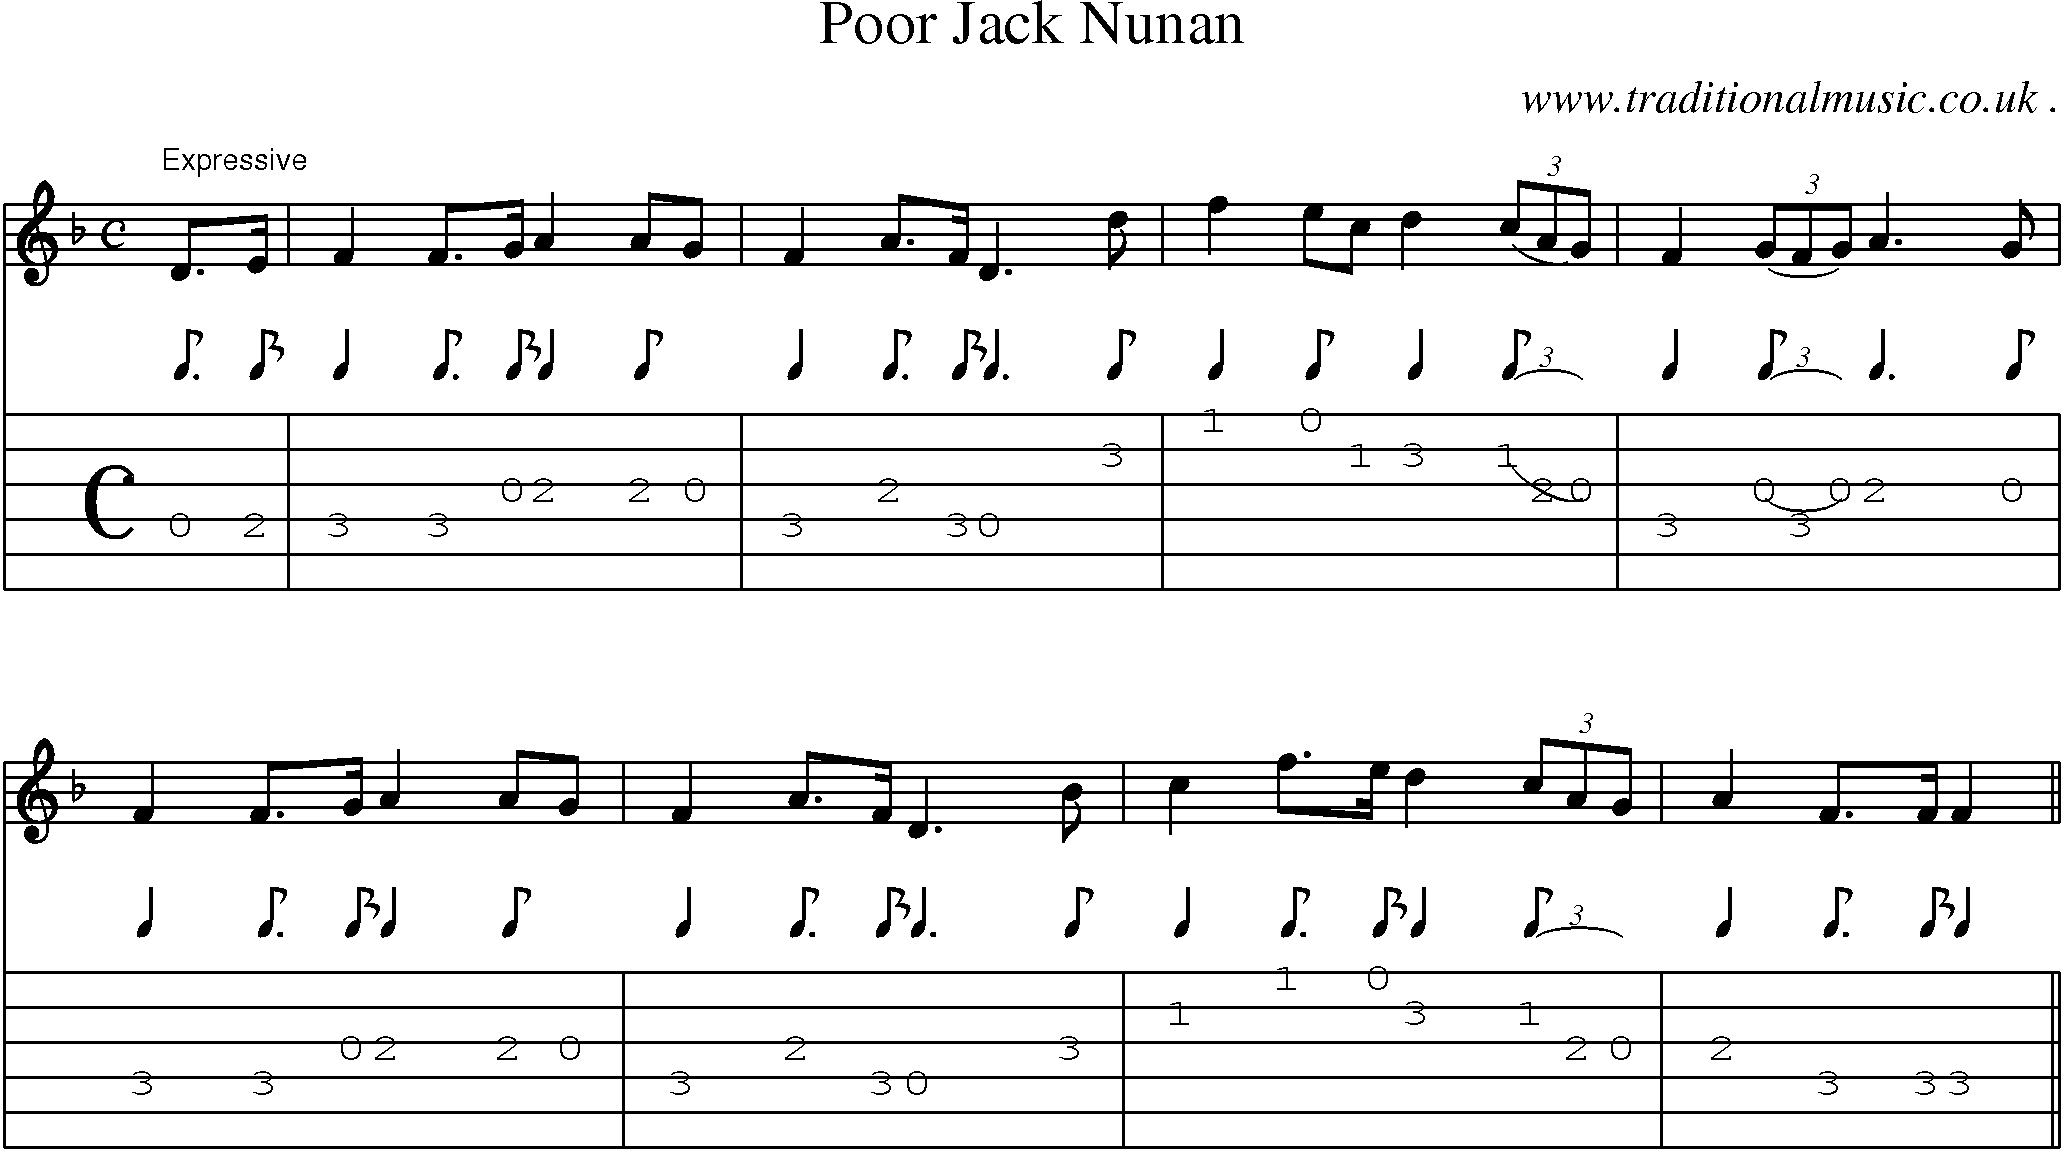 Sheet-Music and Guitar Tabs for Poor Jack Nunan